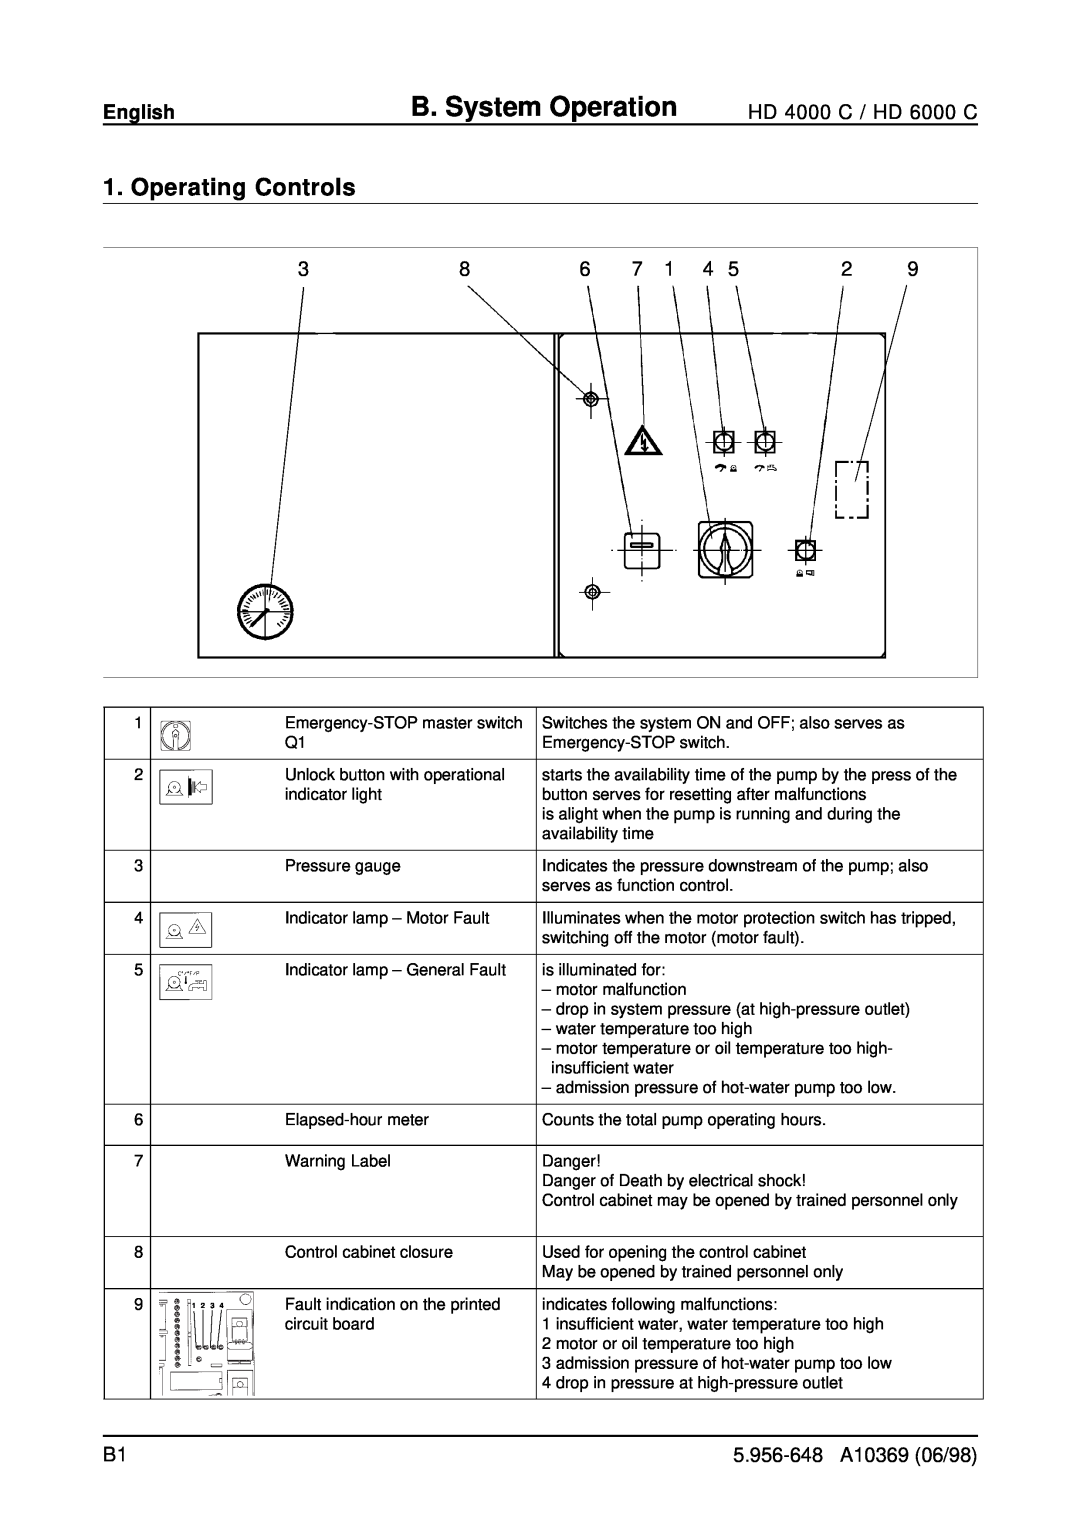 Karcher HD 4000 C, HD 6000 C operating instructions B. System Operation, Operating Controls, English 